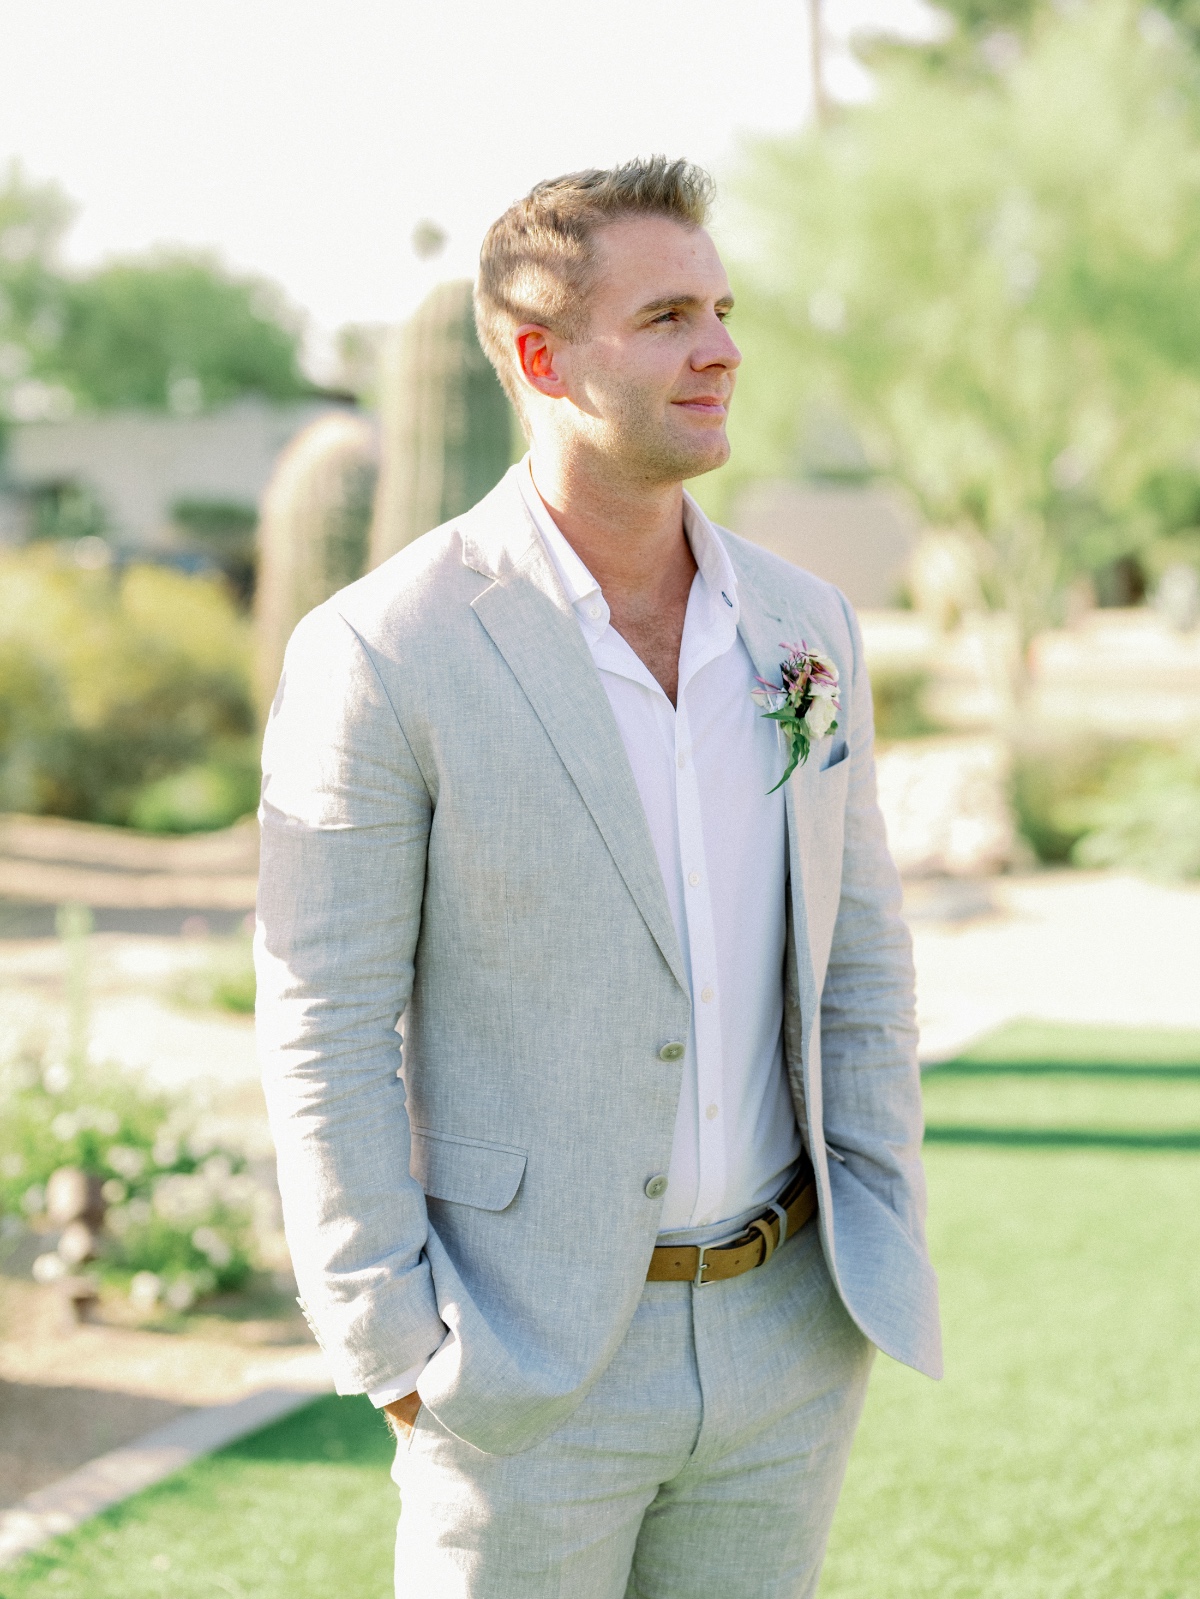 Modern groom in light grey suit at desert wedding venue 